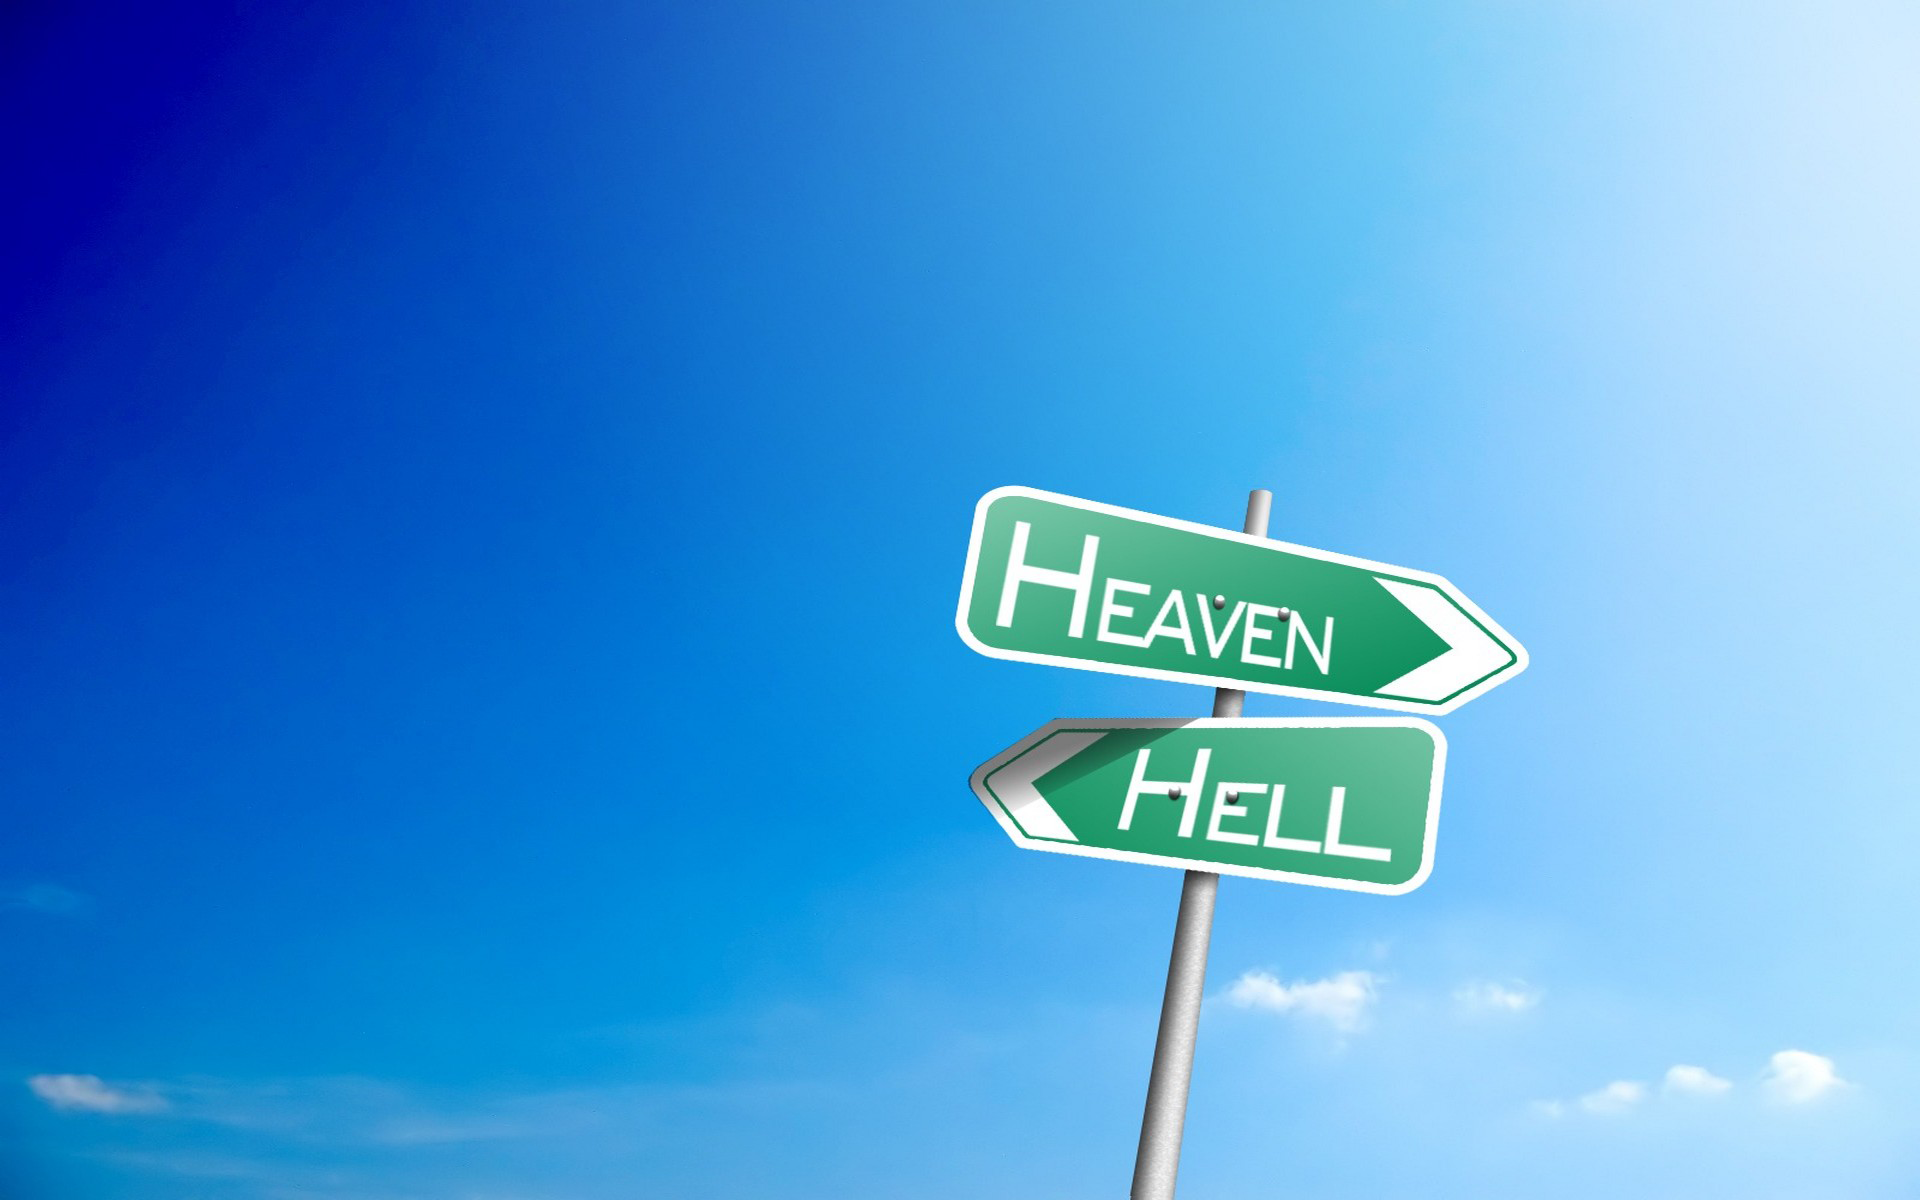 signs, Hell, Heaven, blue background - desktop wallpaper